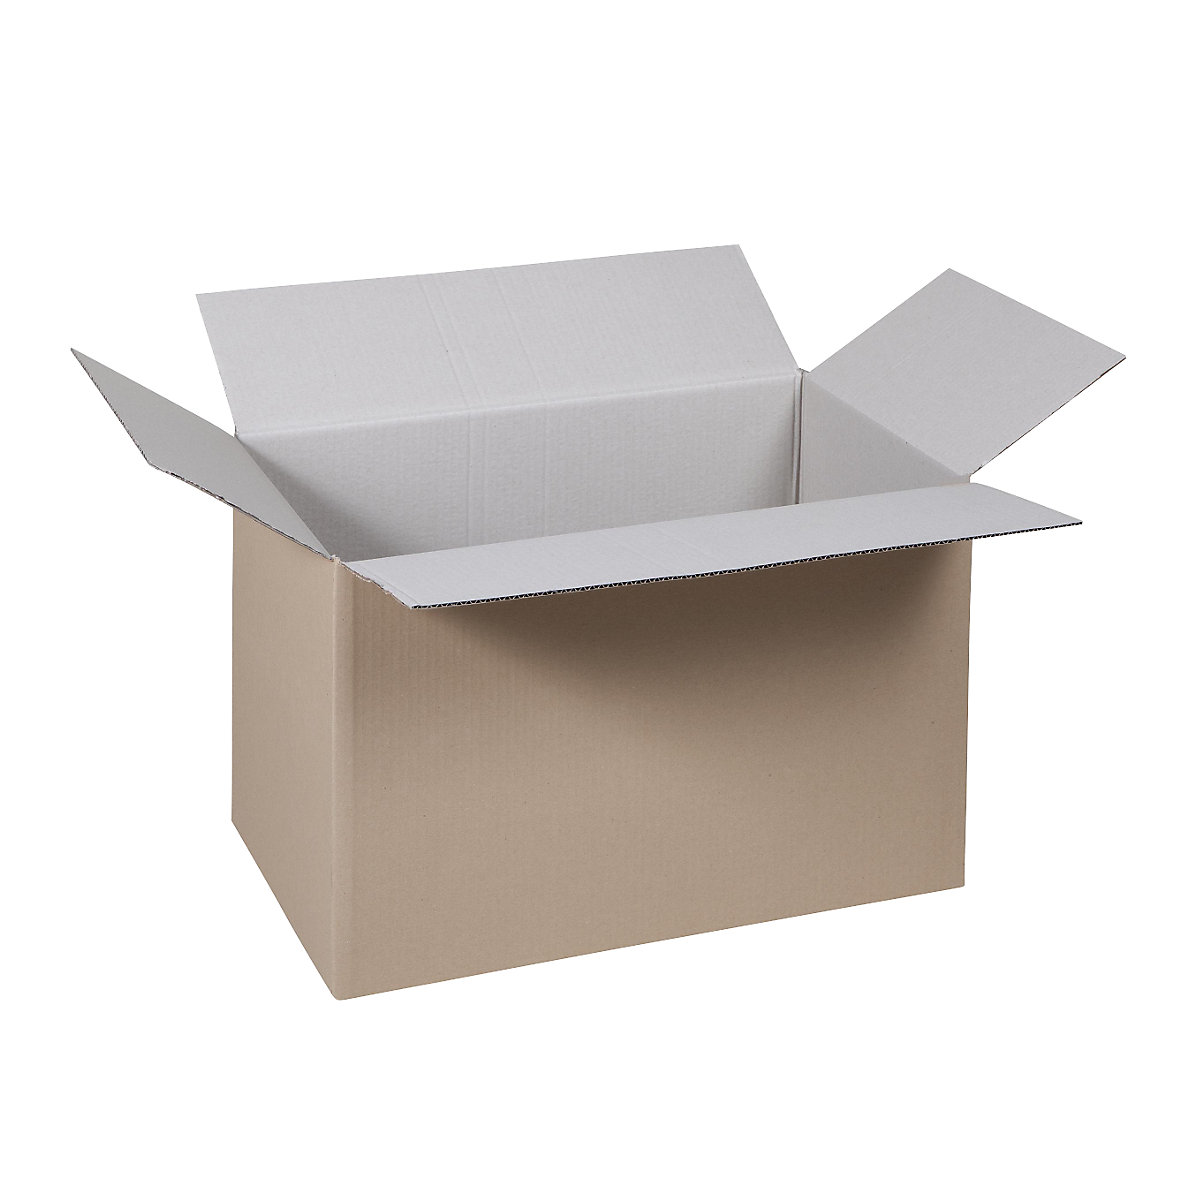 Folding cardboard box, FEFCO 0201, made of single fluted cardboard, internal dimensions 430 x 305 x 315 mm, pack of 50-34